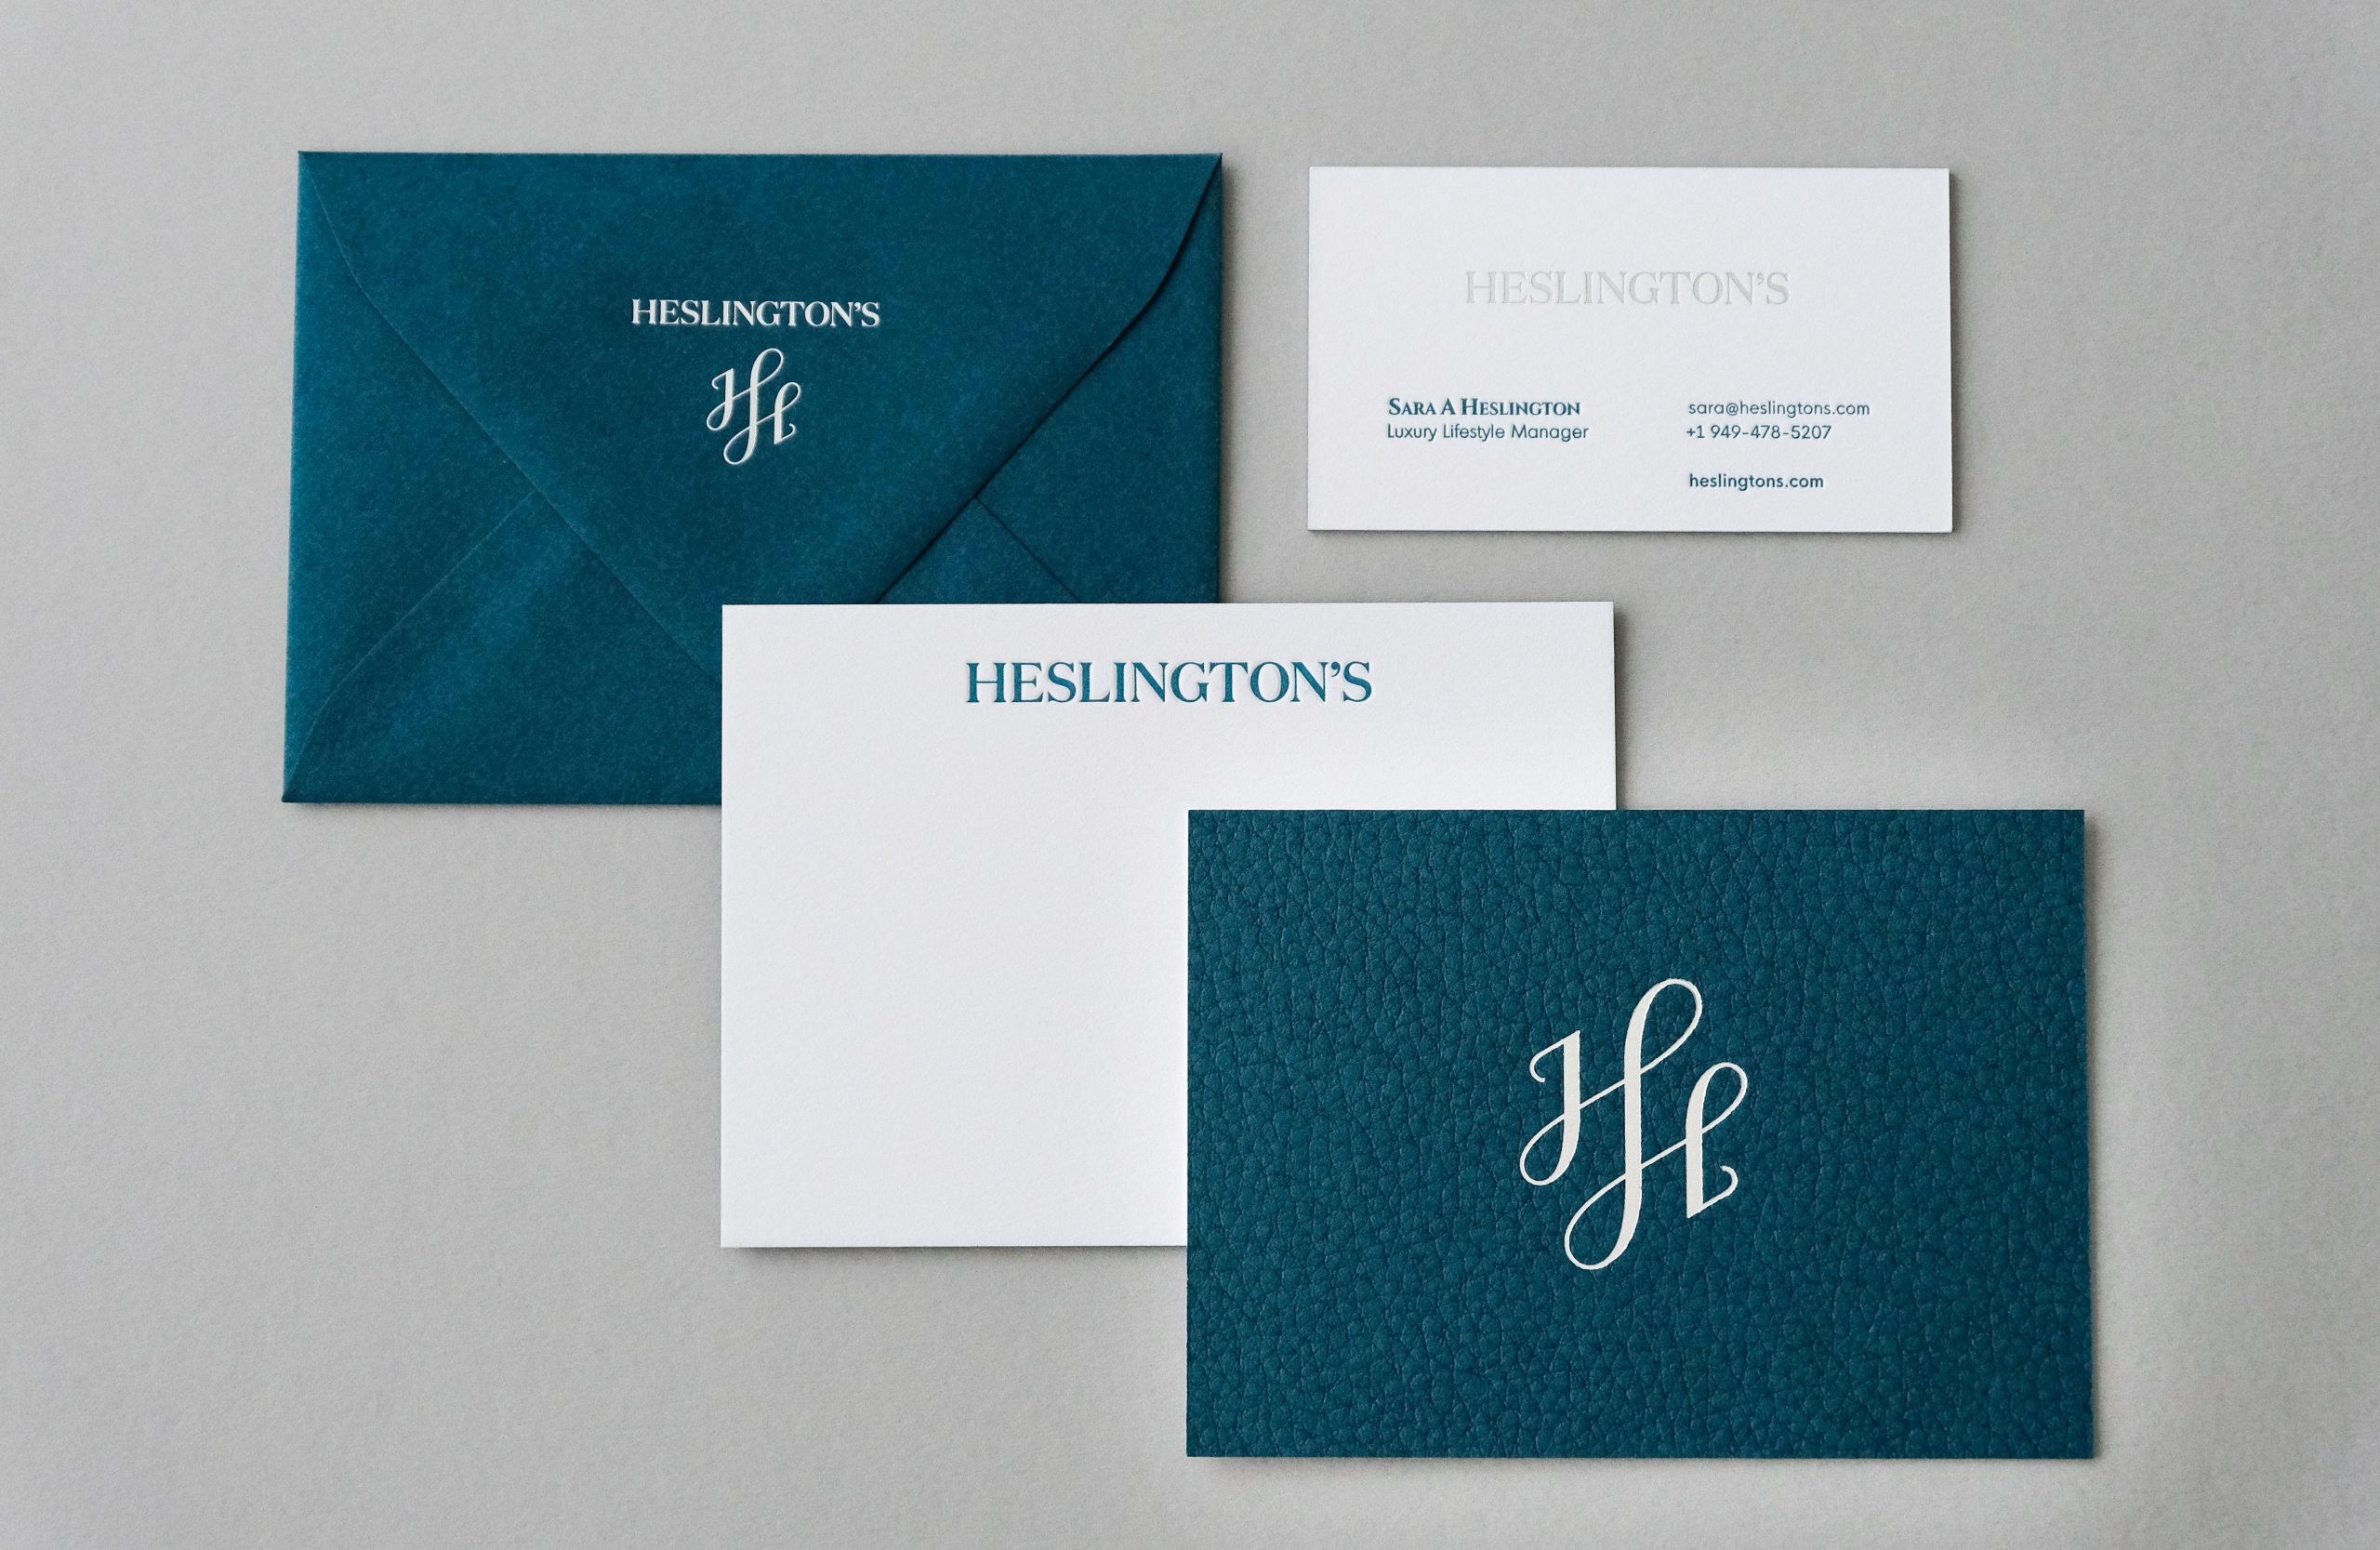 Heslington's Corporate Stationery